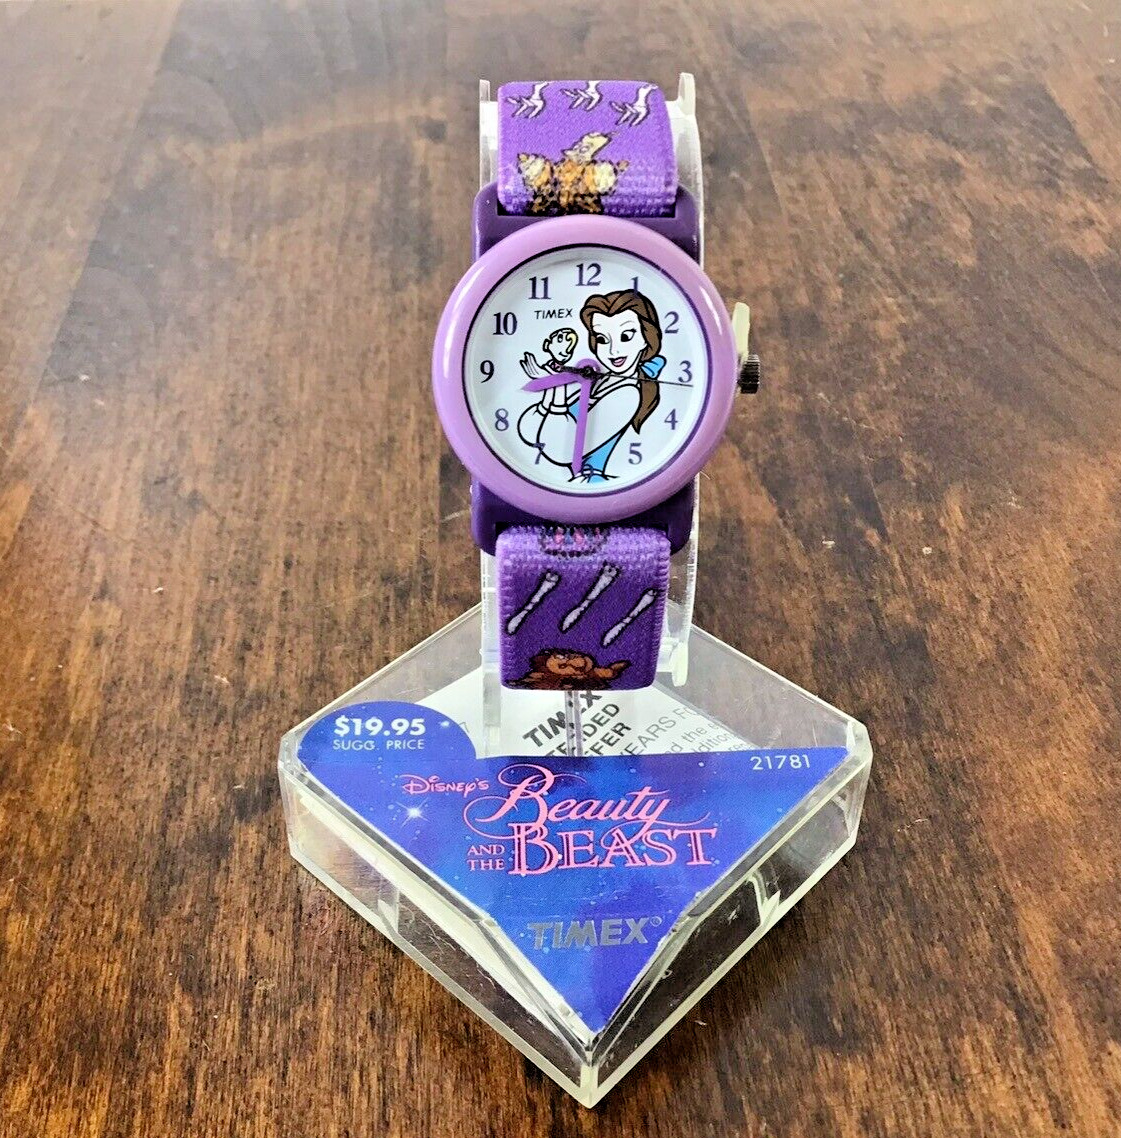 NWT Timex Disney\'s Beauty And The Beast Wrist Watch Purple 21781